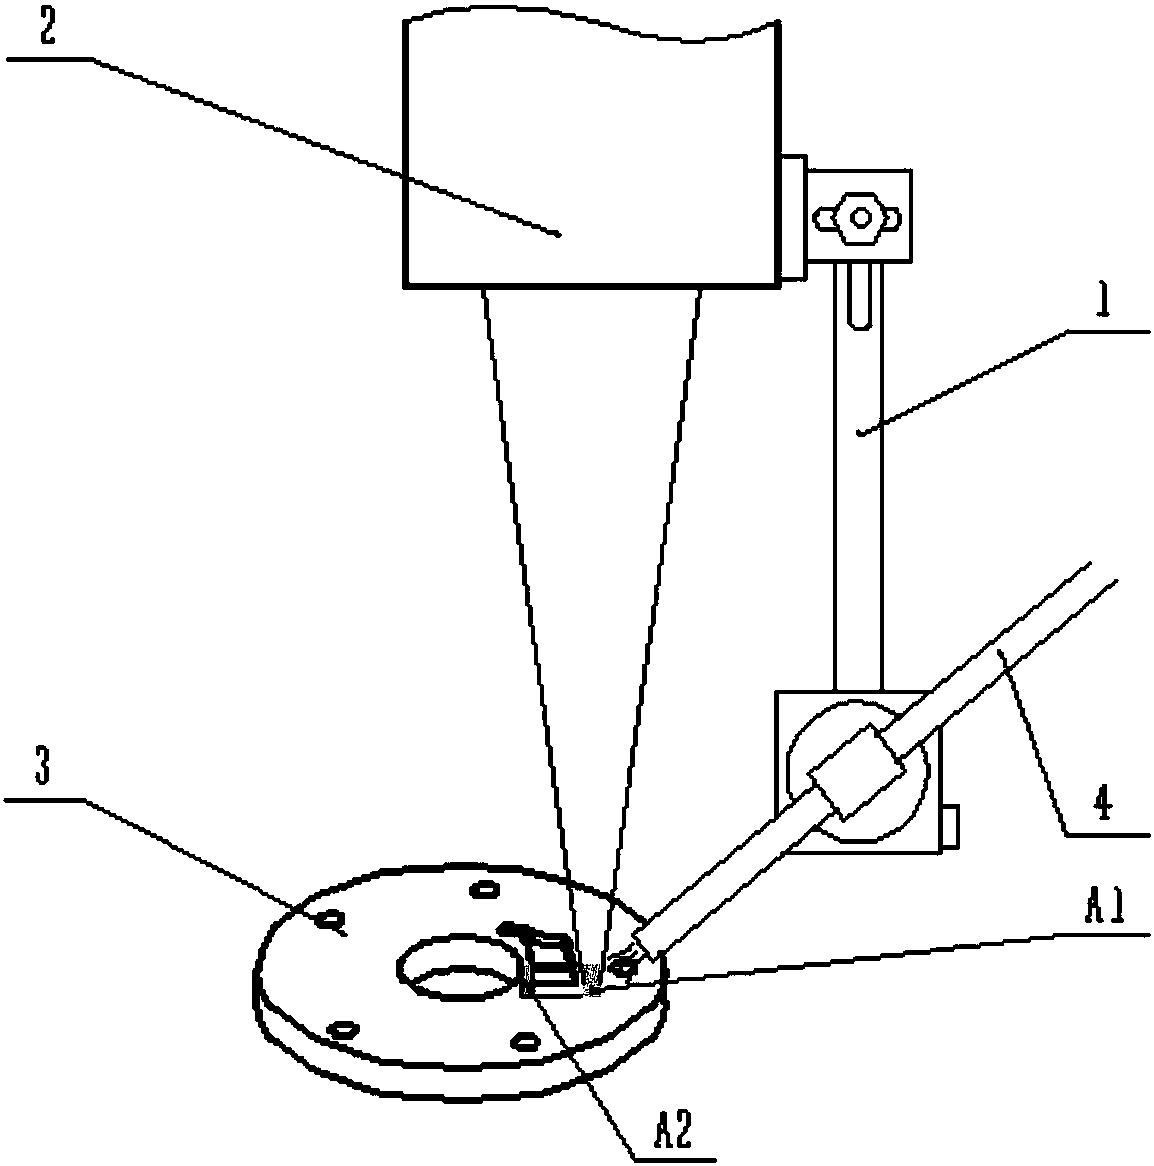 A powder metallurgy automobile engine sprocket lock pin hole laser quenching method